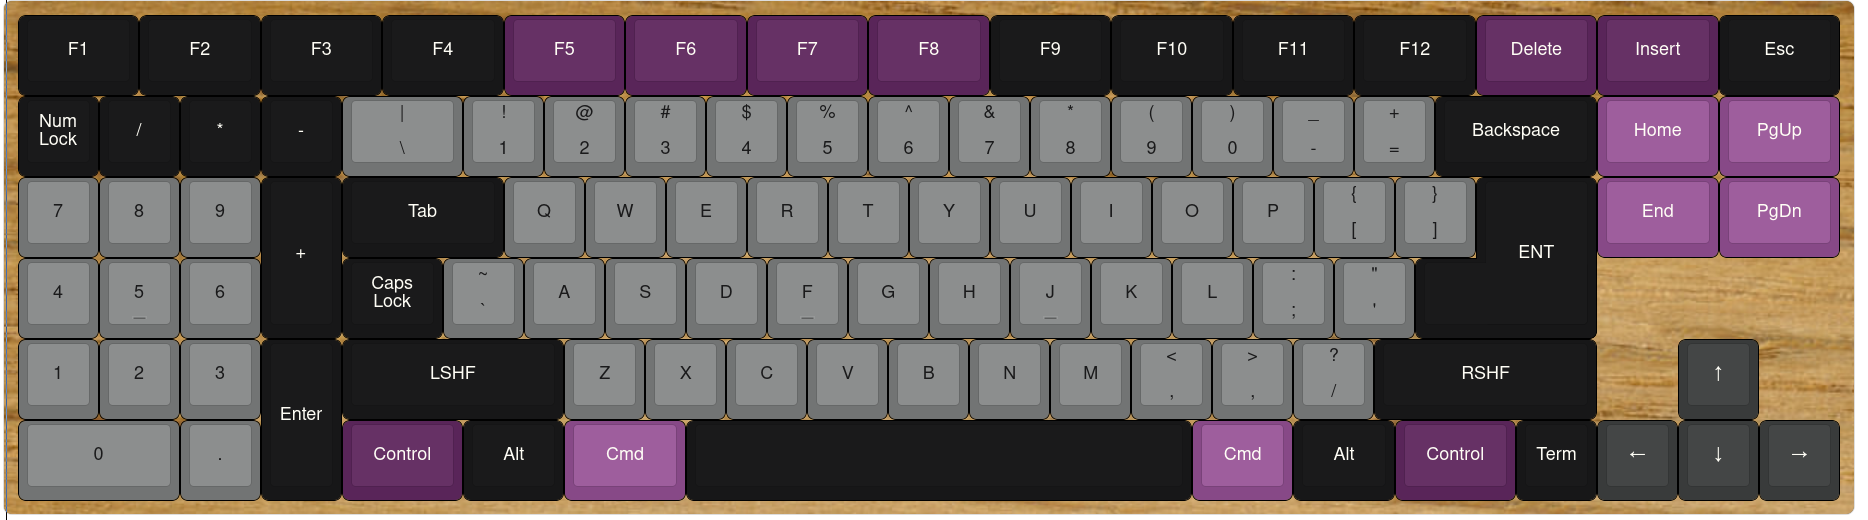 DIY Keyboard custom design